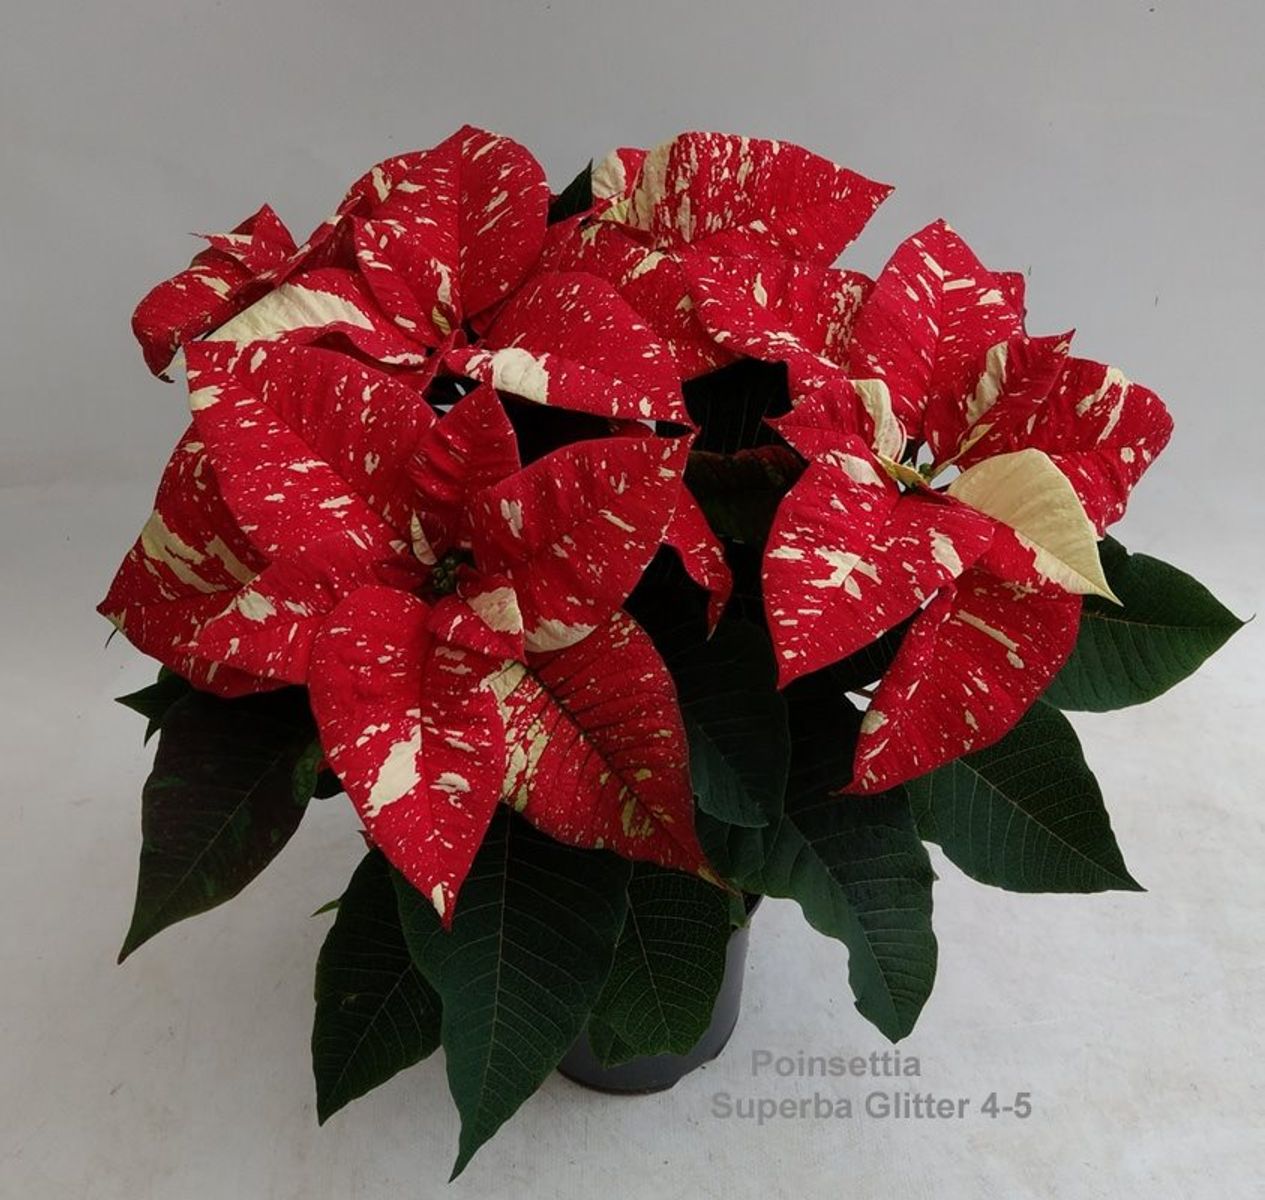 Poinsettia euphorbia pulcherrima Red Glitter